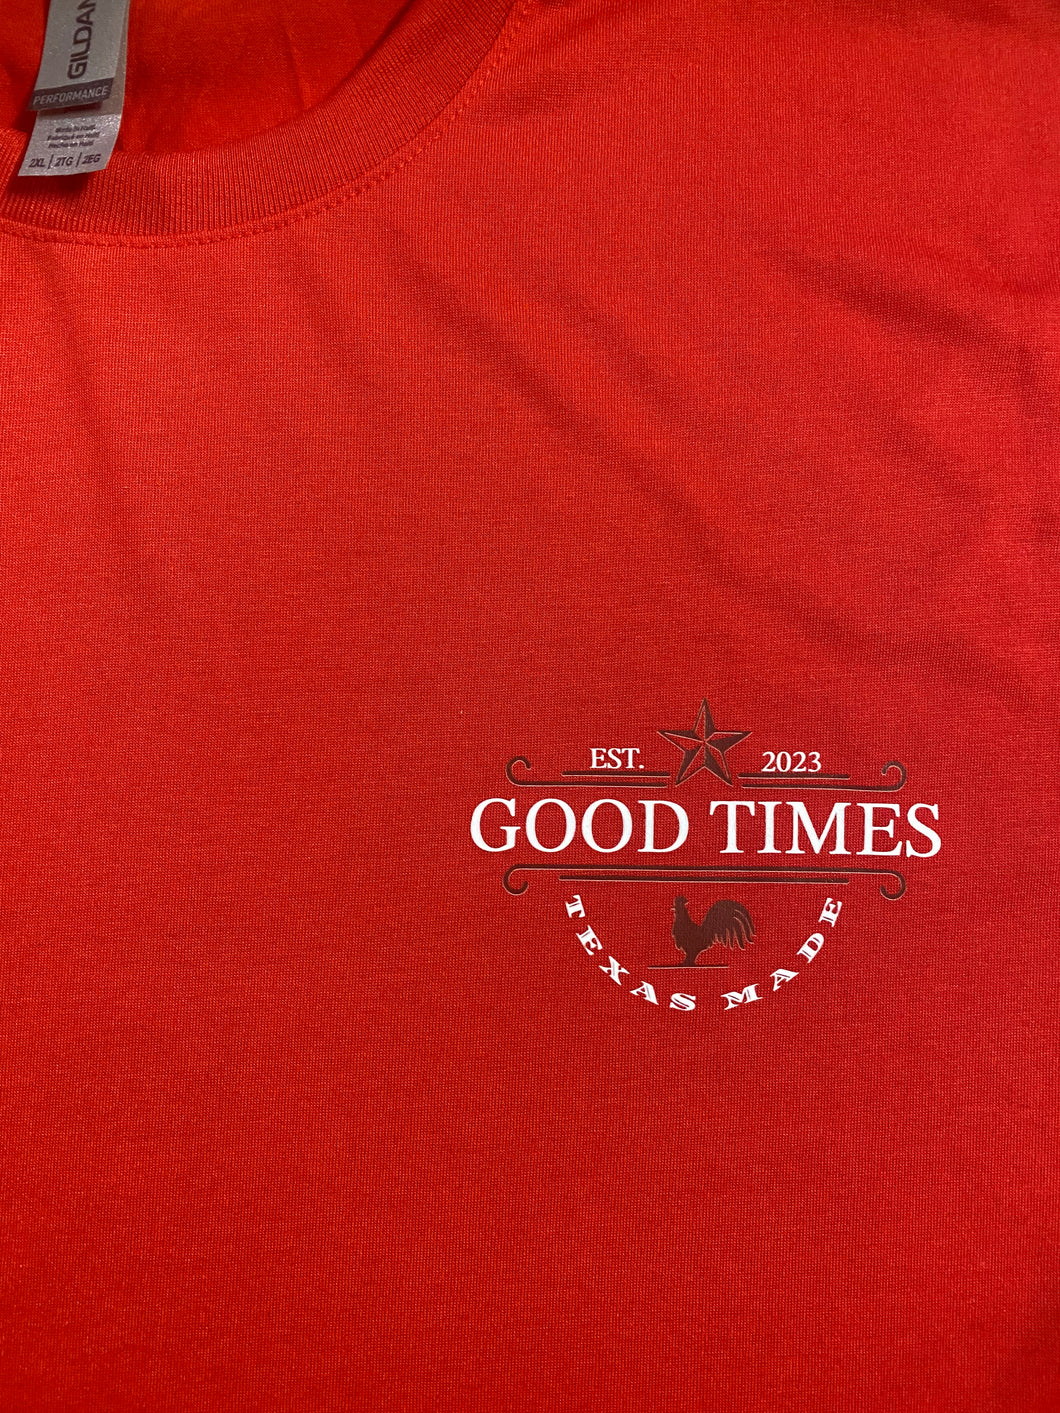 Good Times Red T-shirt